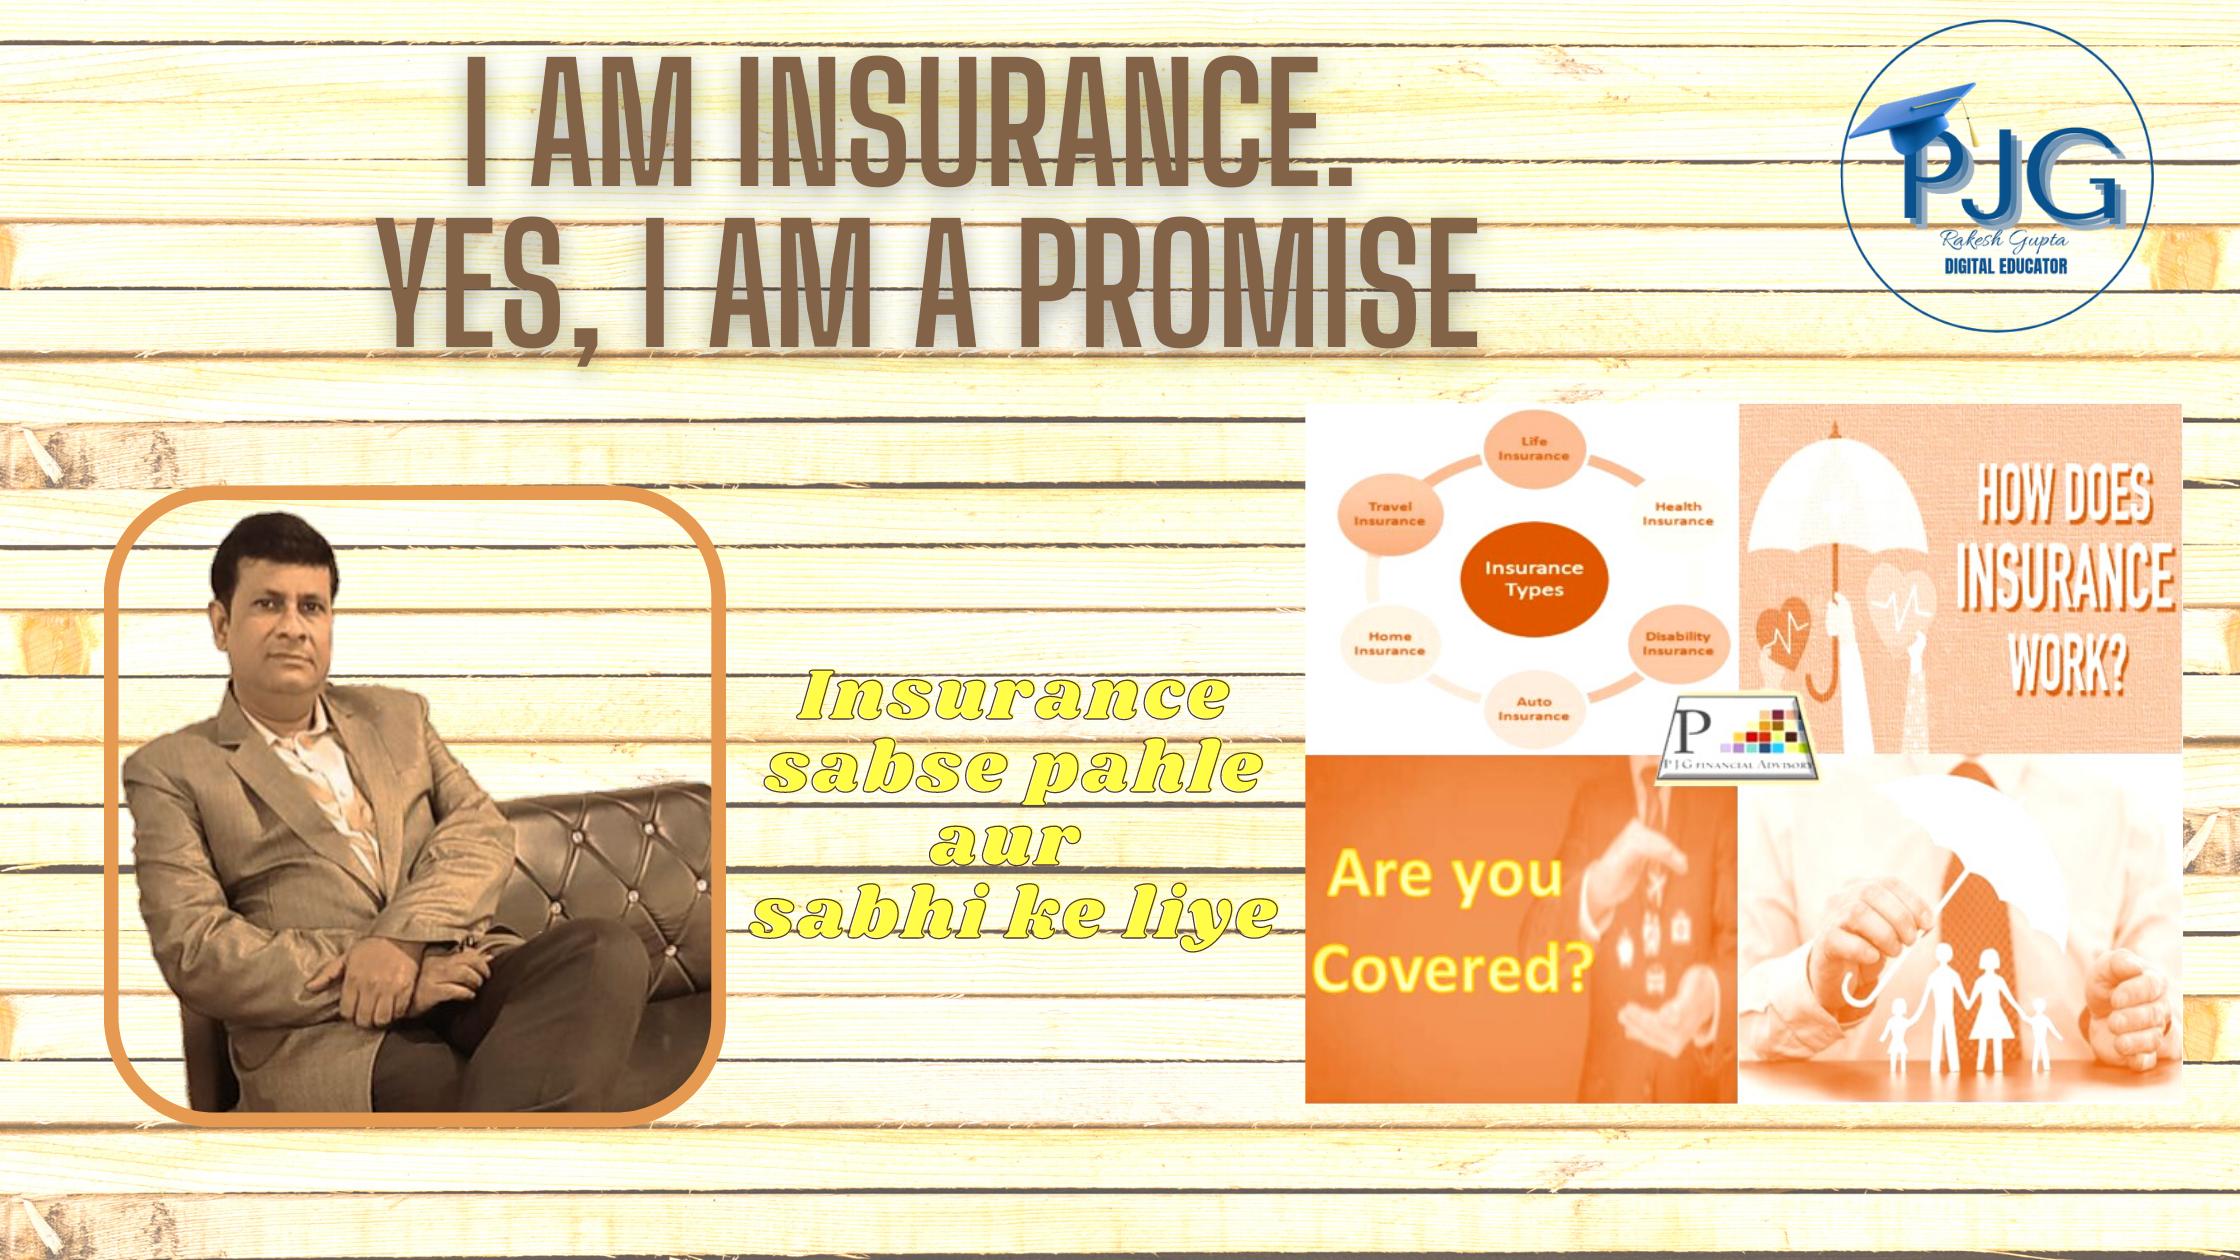 I am Insurance